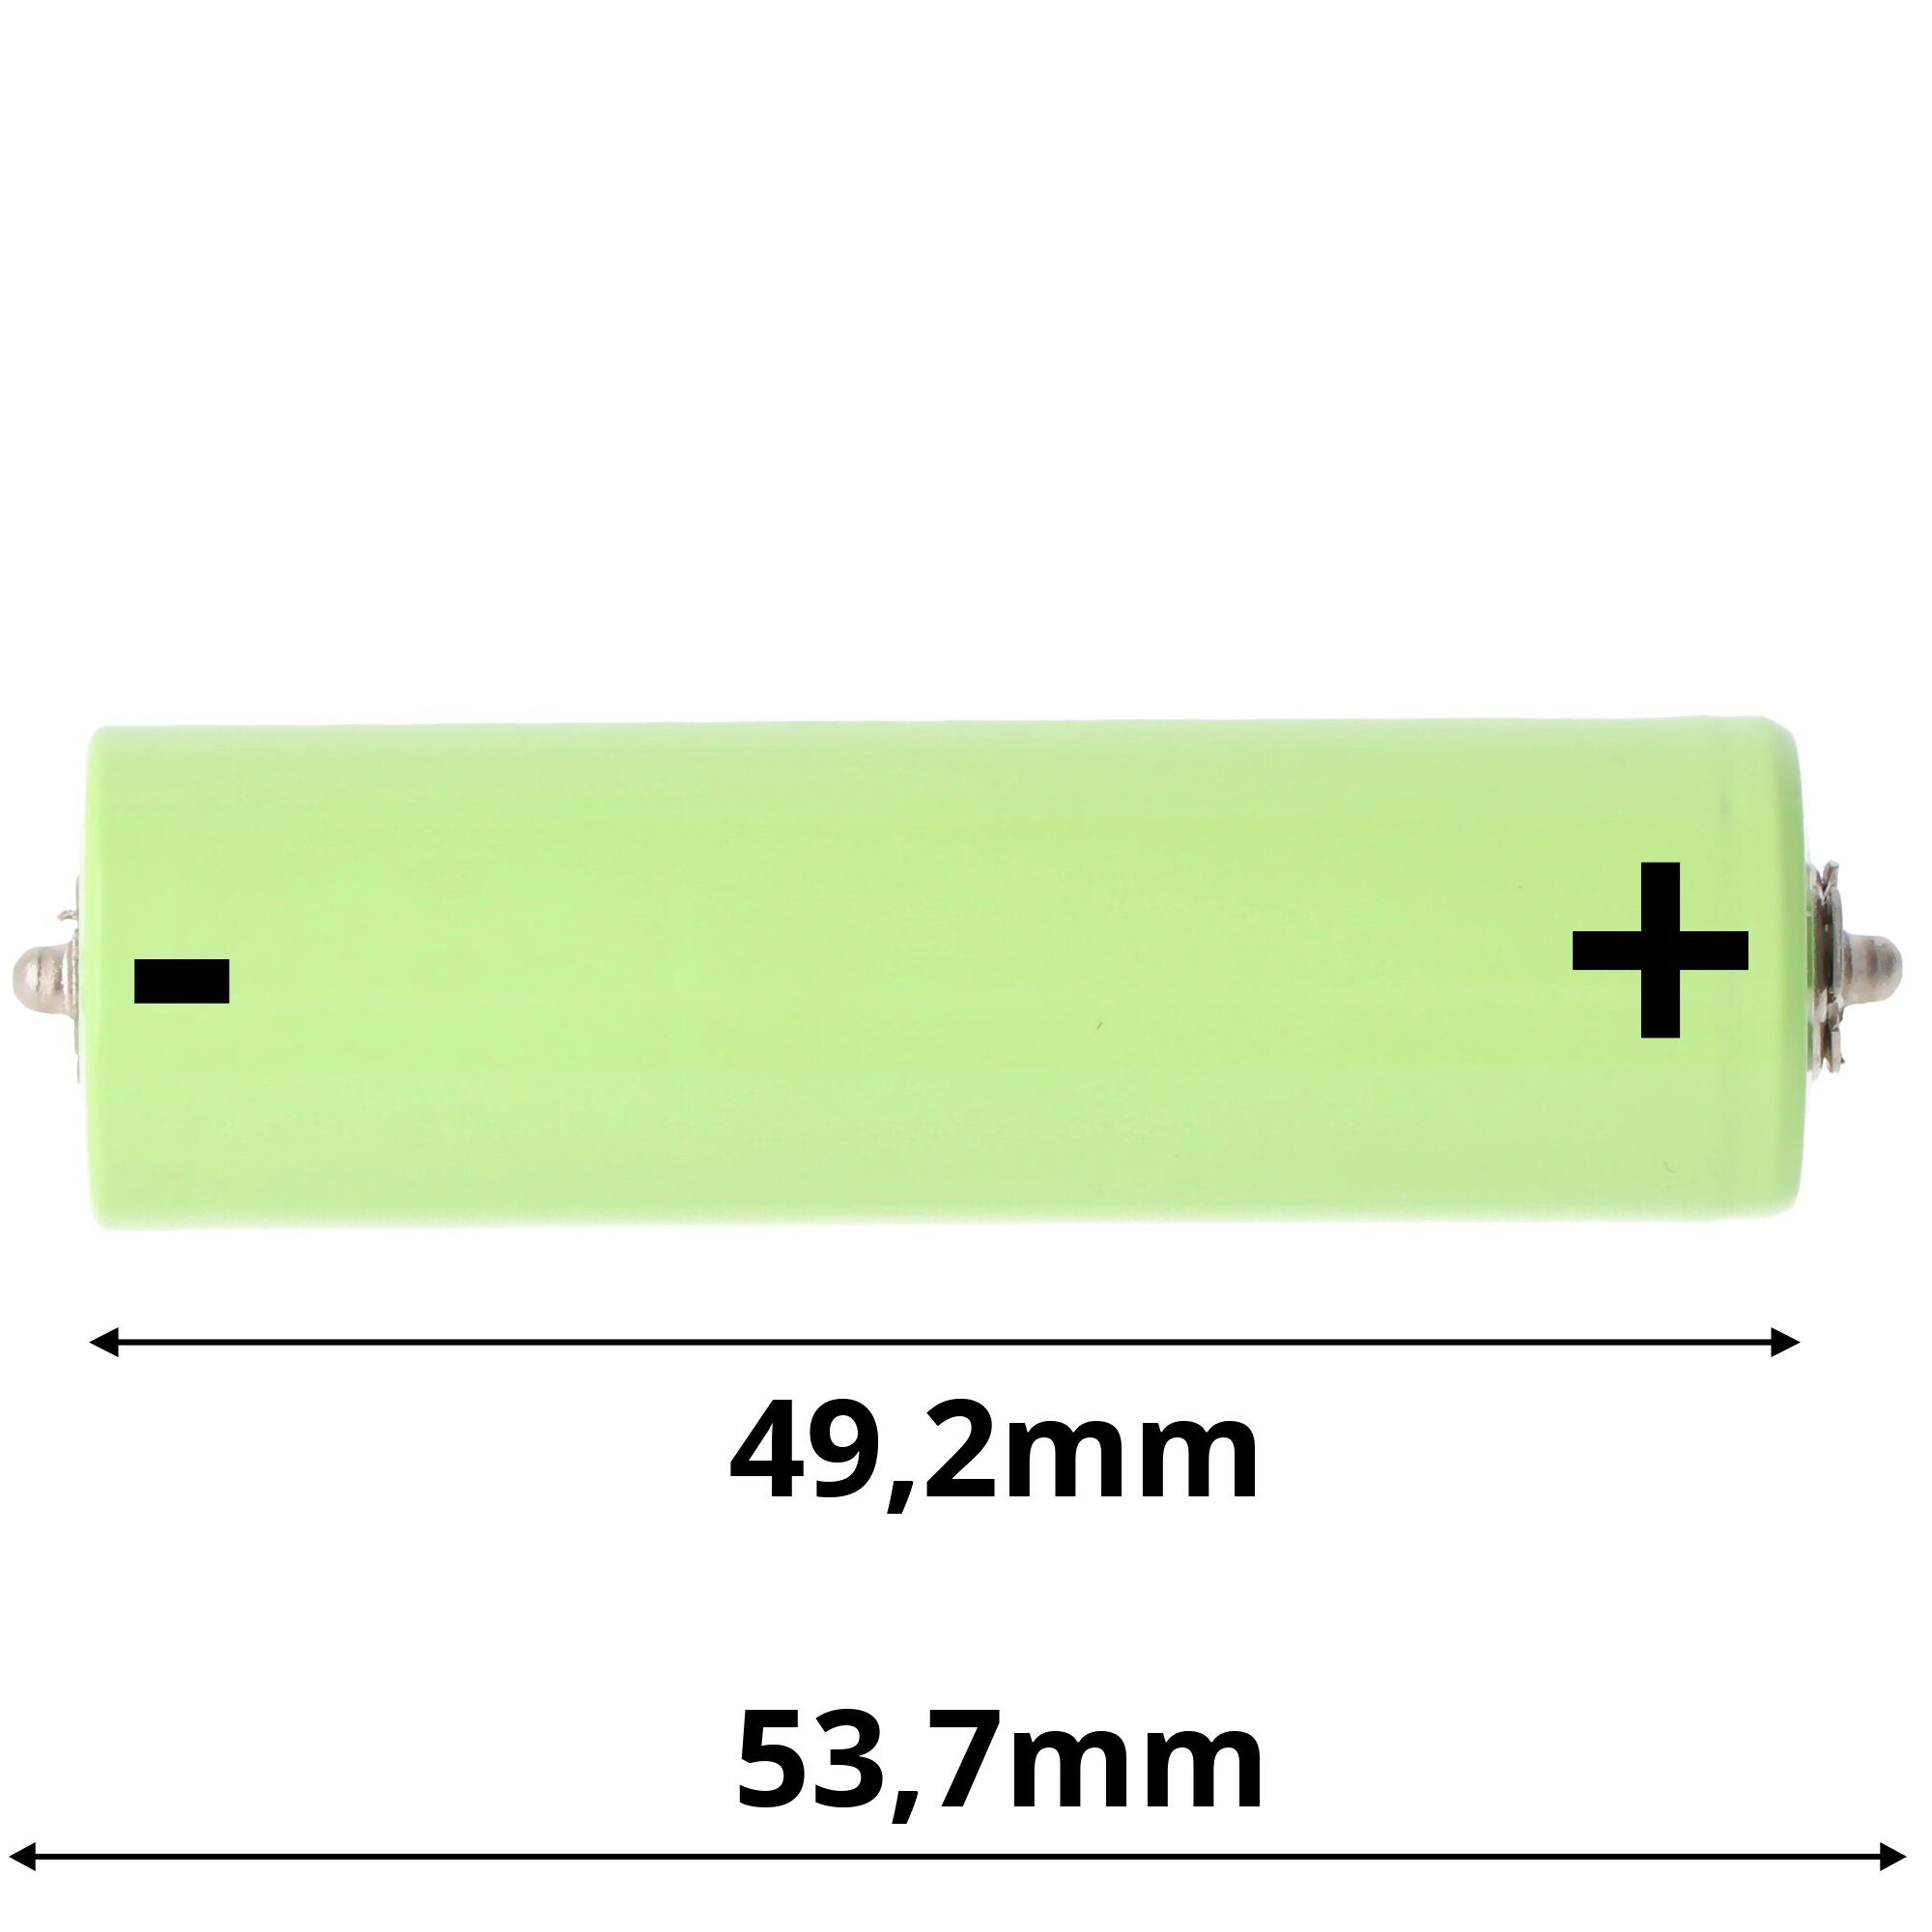 Akku (54,2) 14,5mm x V) exakt 1600 NiMH49,40 mAh AccuCell für mit (1,2 passend Stiftkontakten Akku